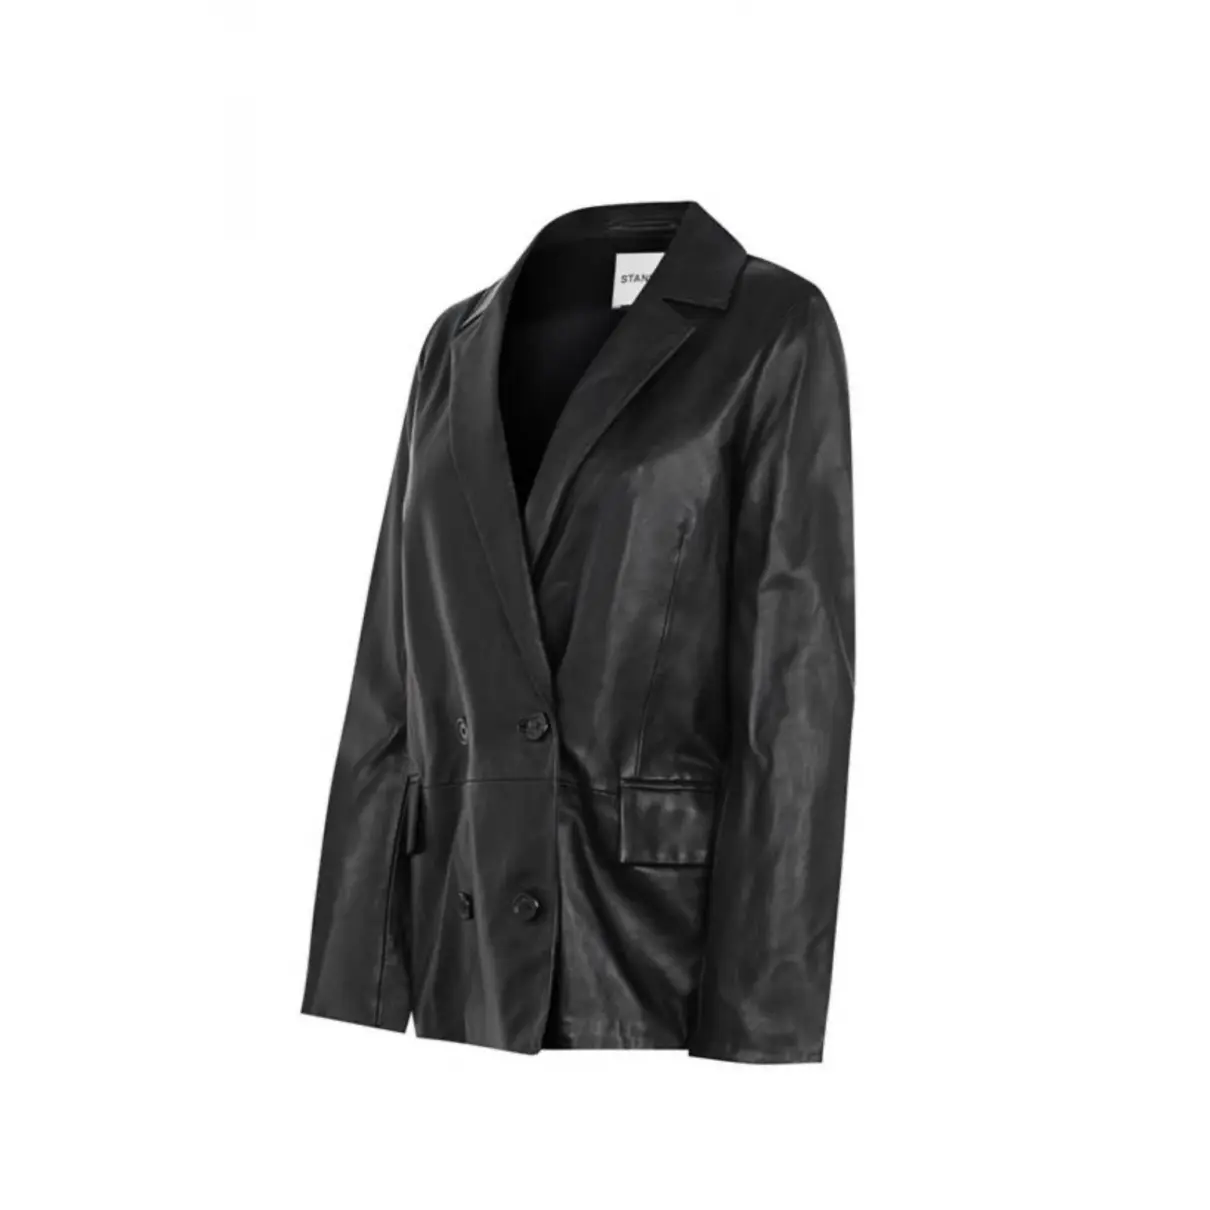 Buy Stand studio Leather blazer online